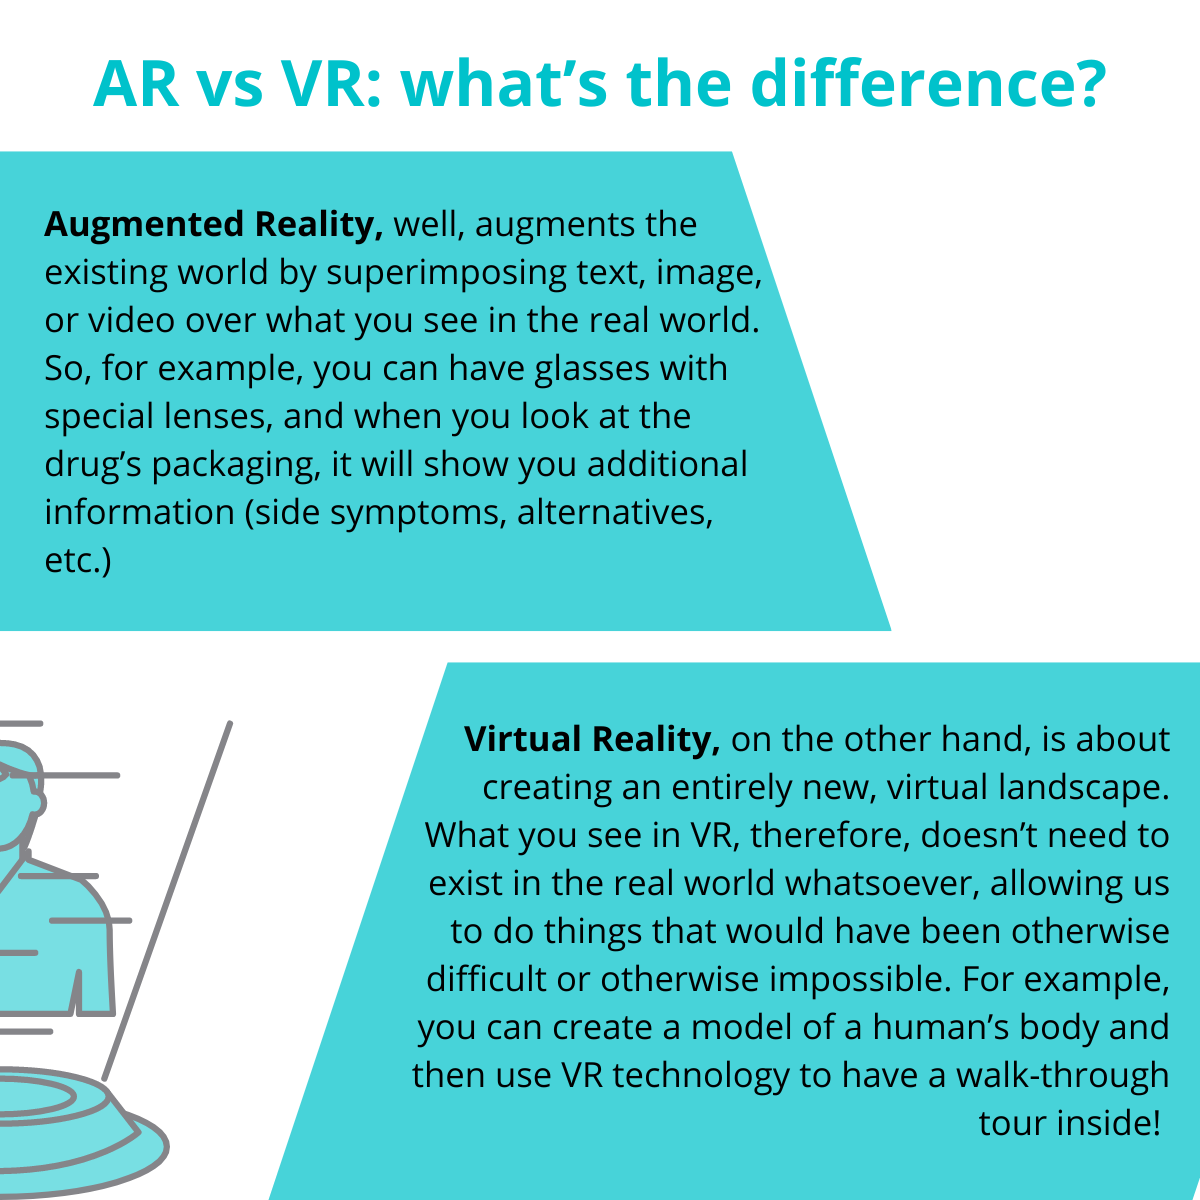 augmented reality versus virtual reality